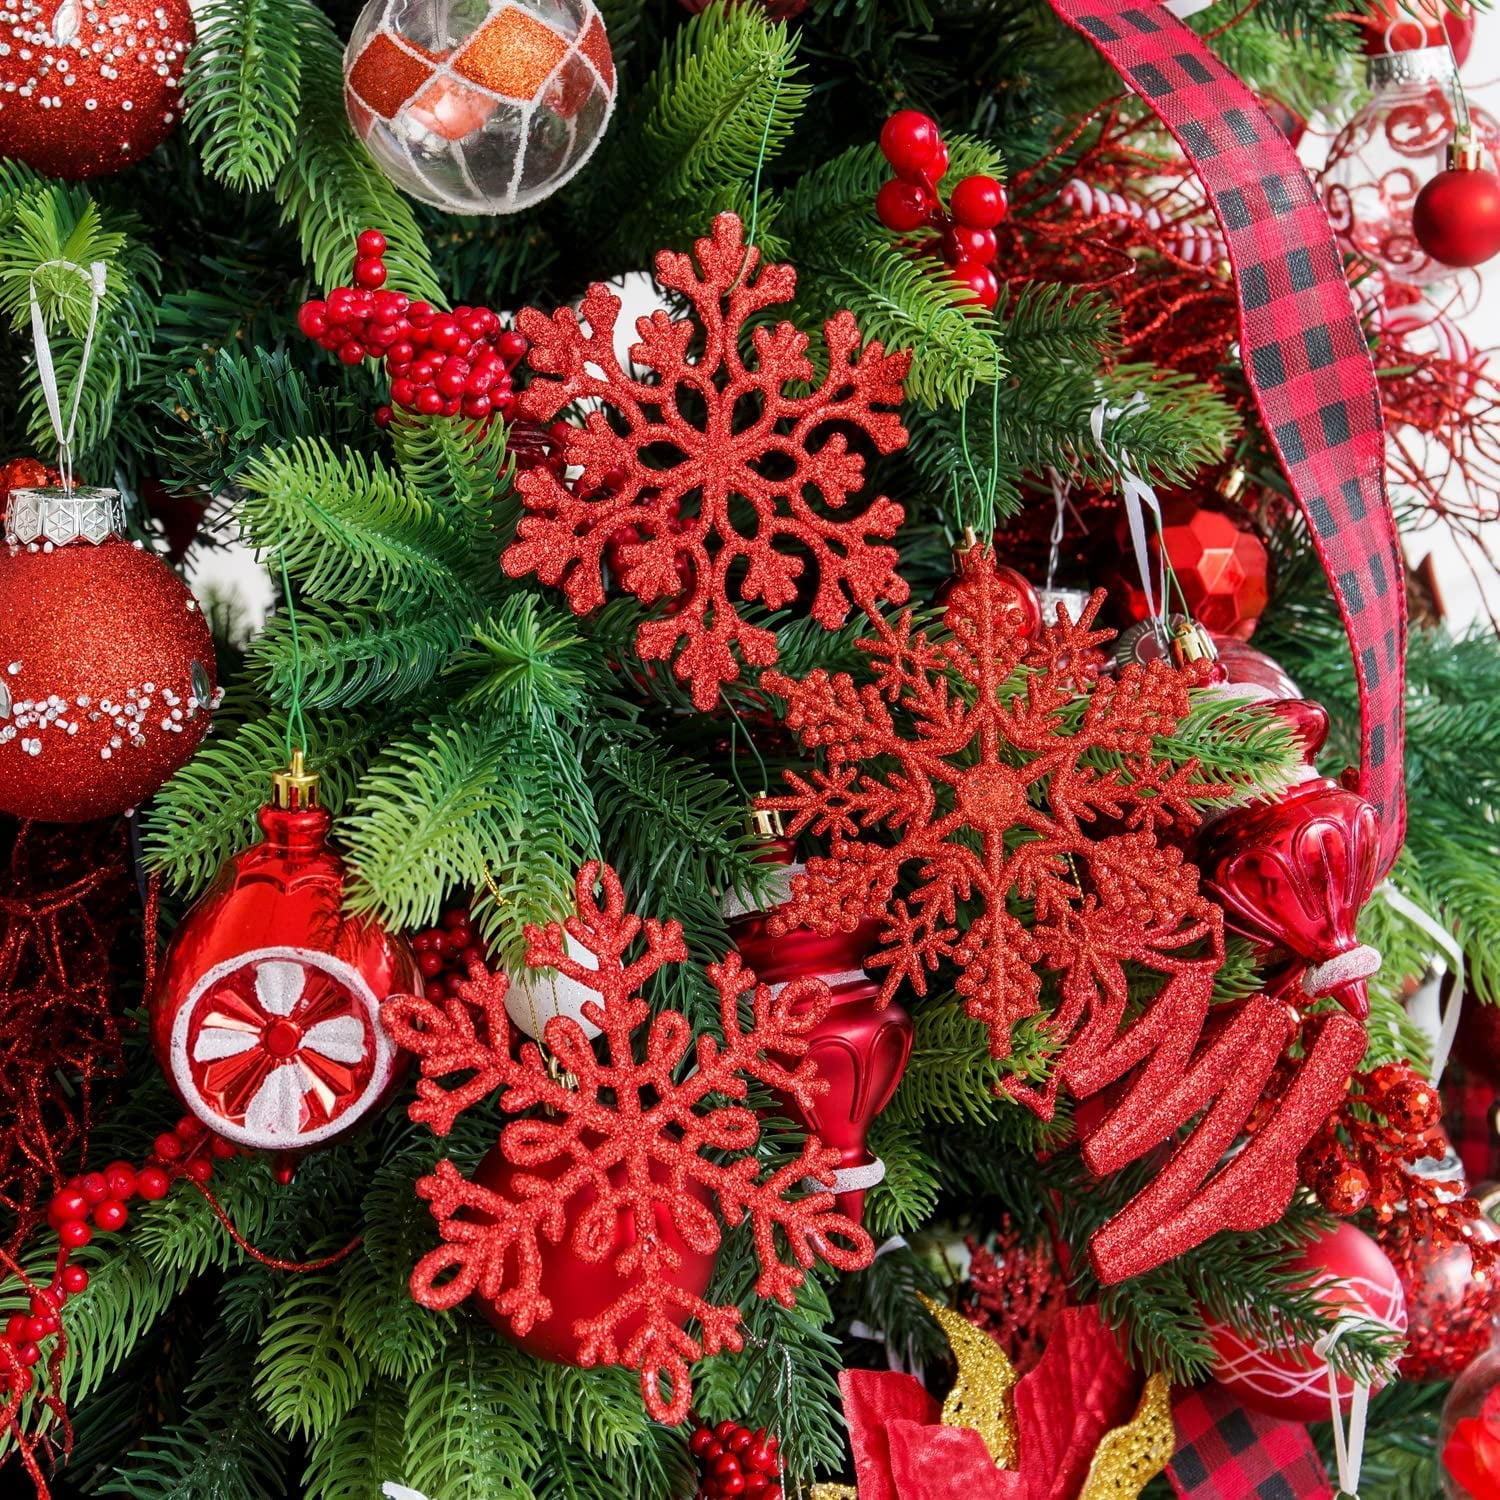 Christmas Tree Decorations Window Miniatures Set of 6 or 12 White Snowflake Ornaments Glitter Snowflakes